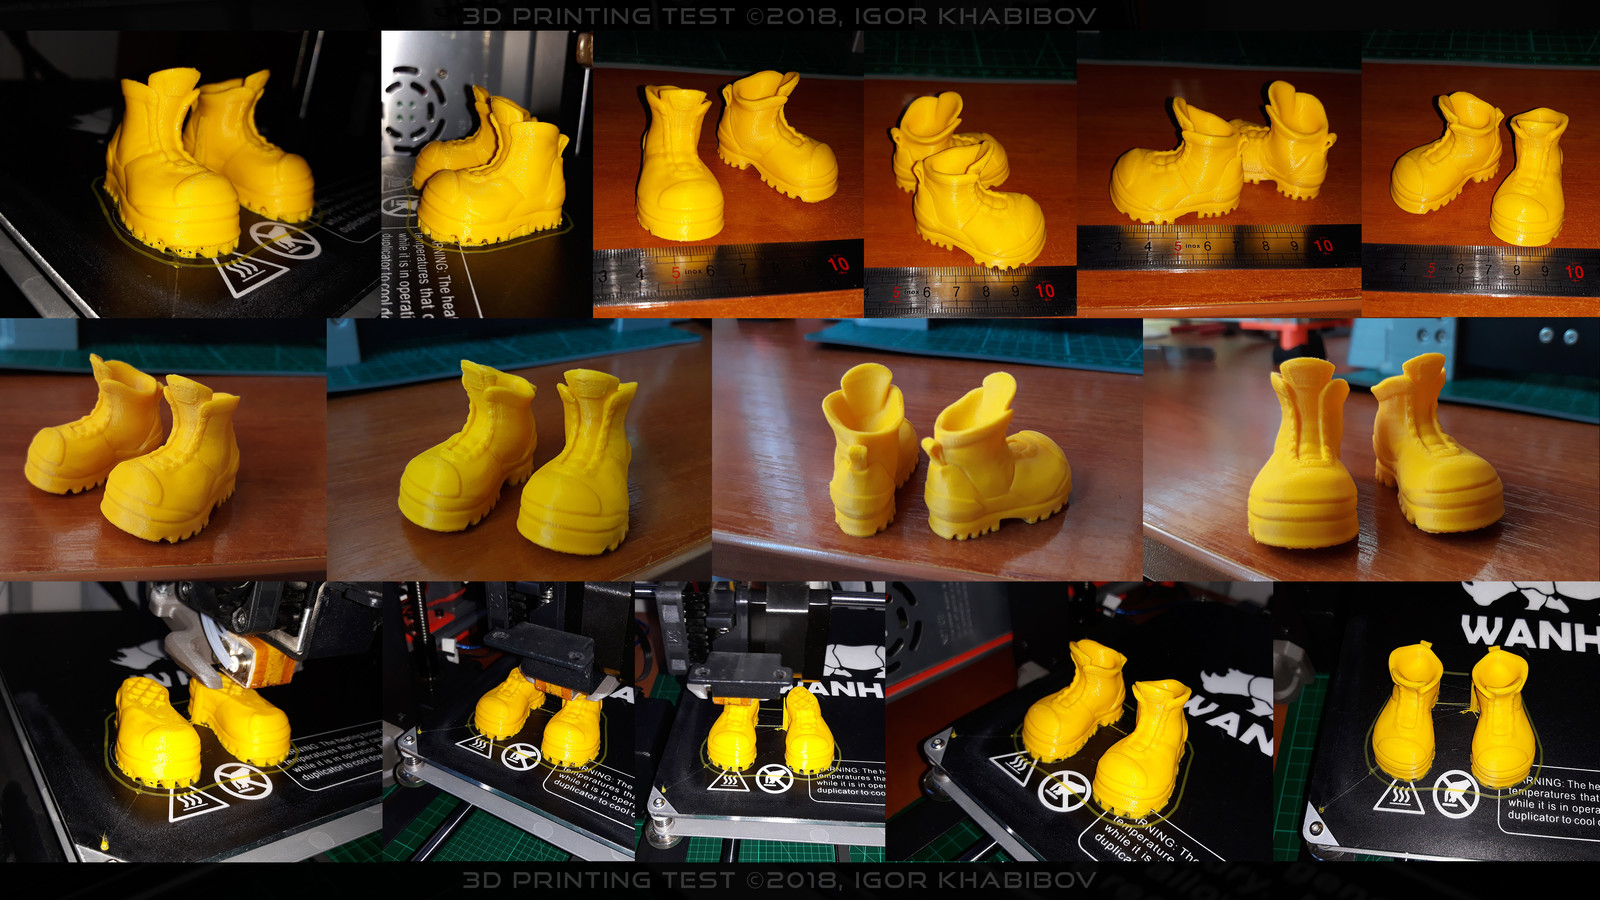 3D Printing test